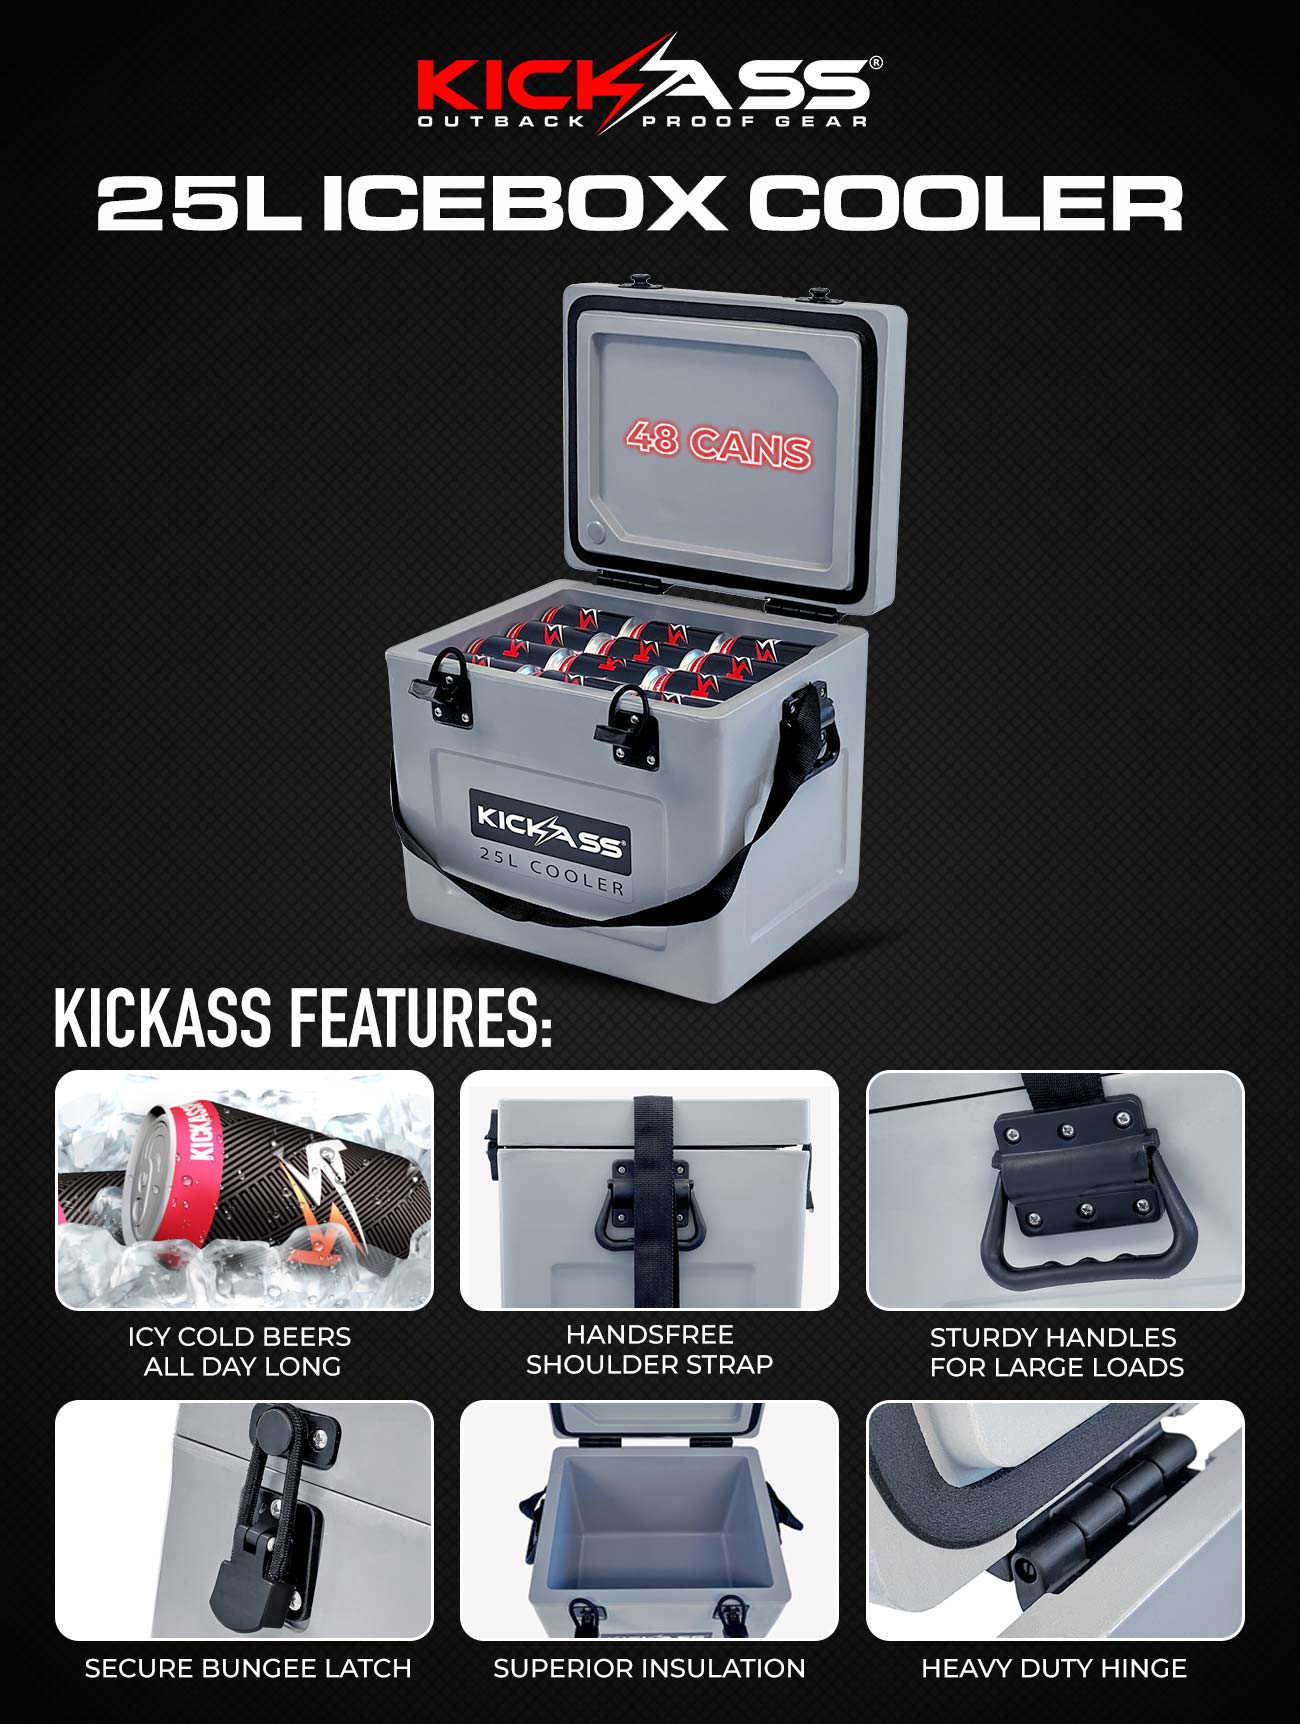 KickAss 45L IceBox Cooler